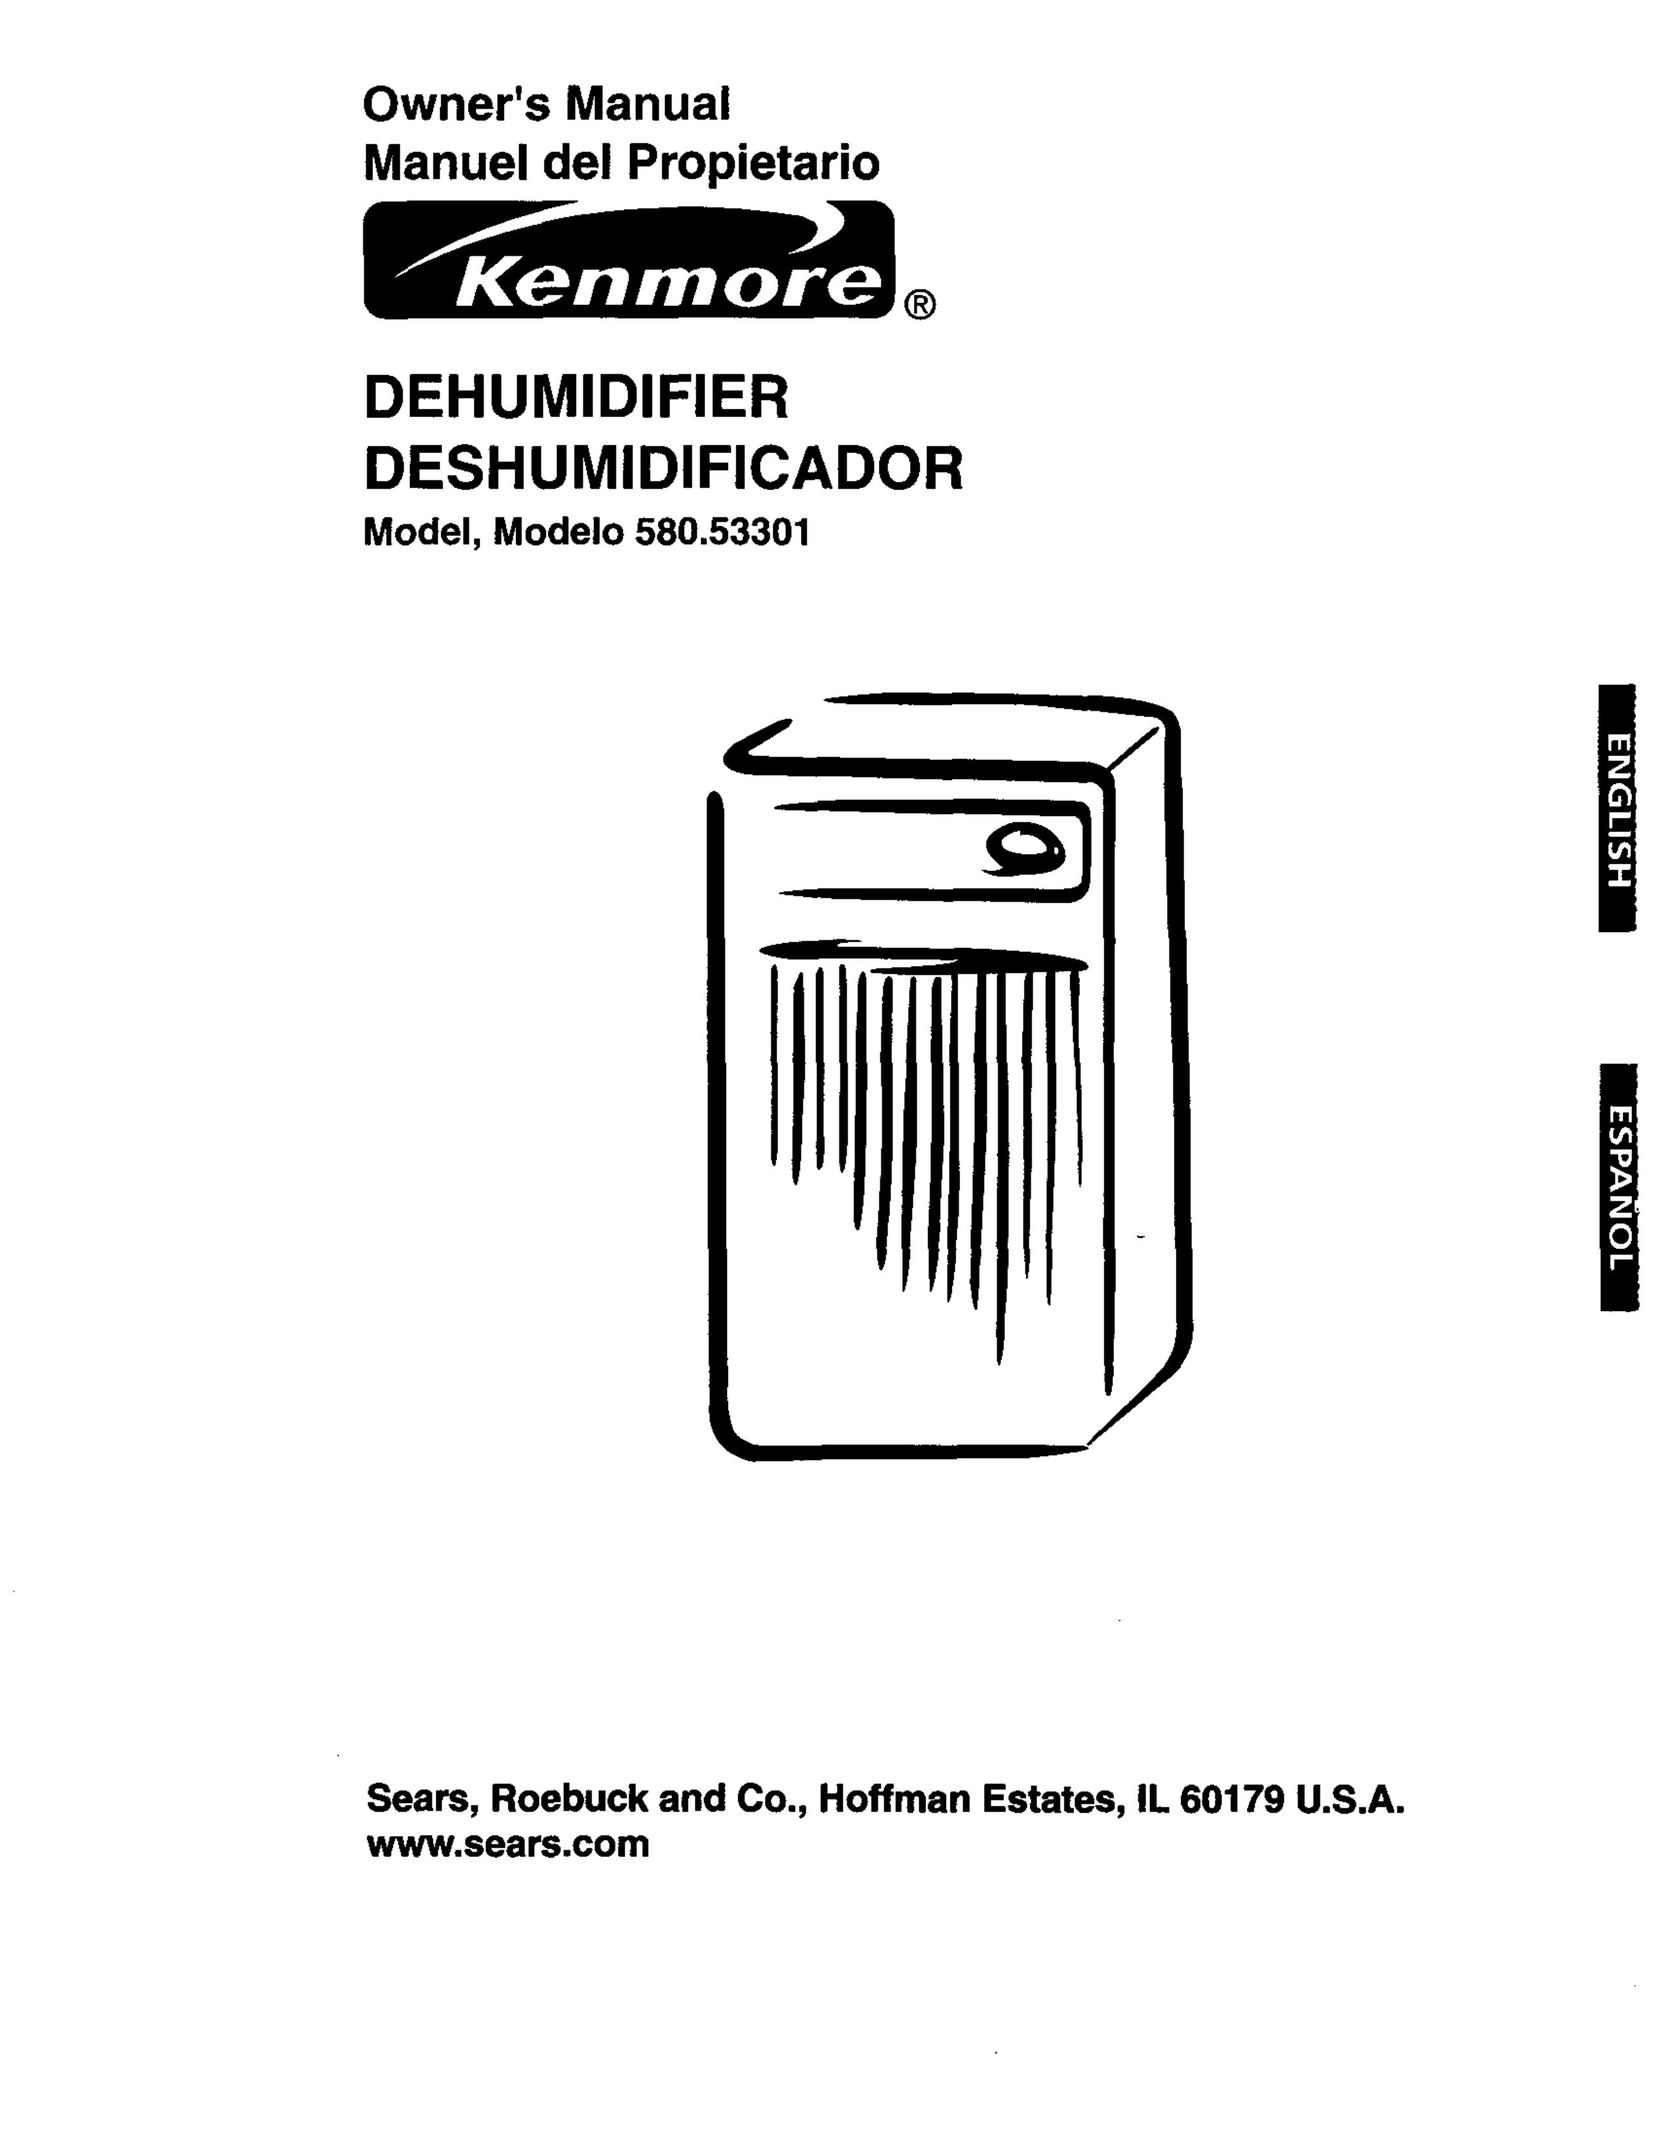 Kenmore 580.53301 Dehumidifier User Manual